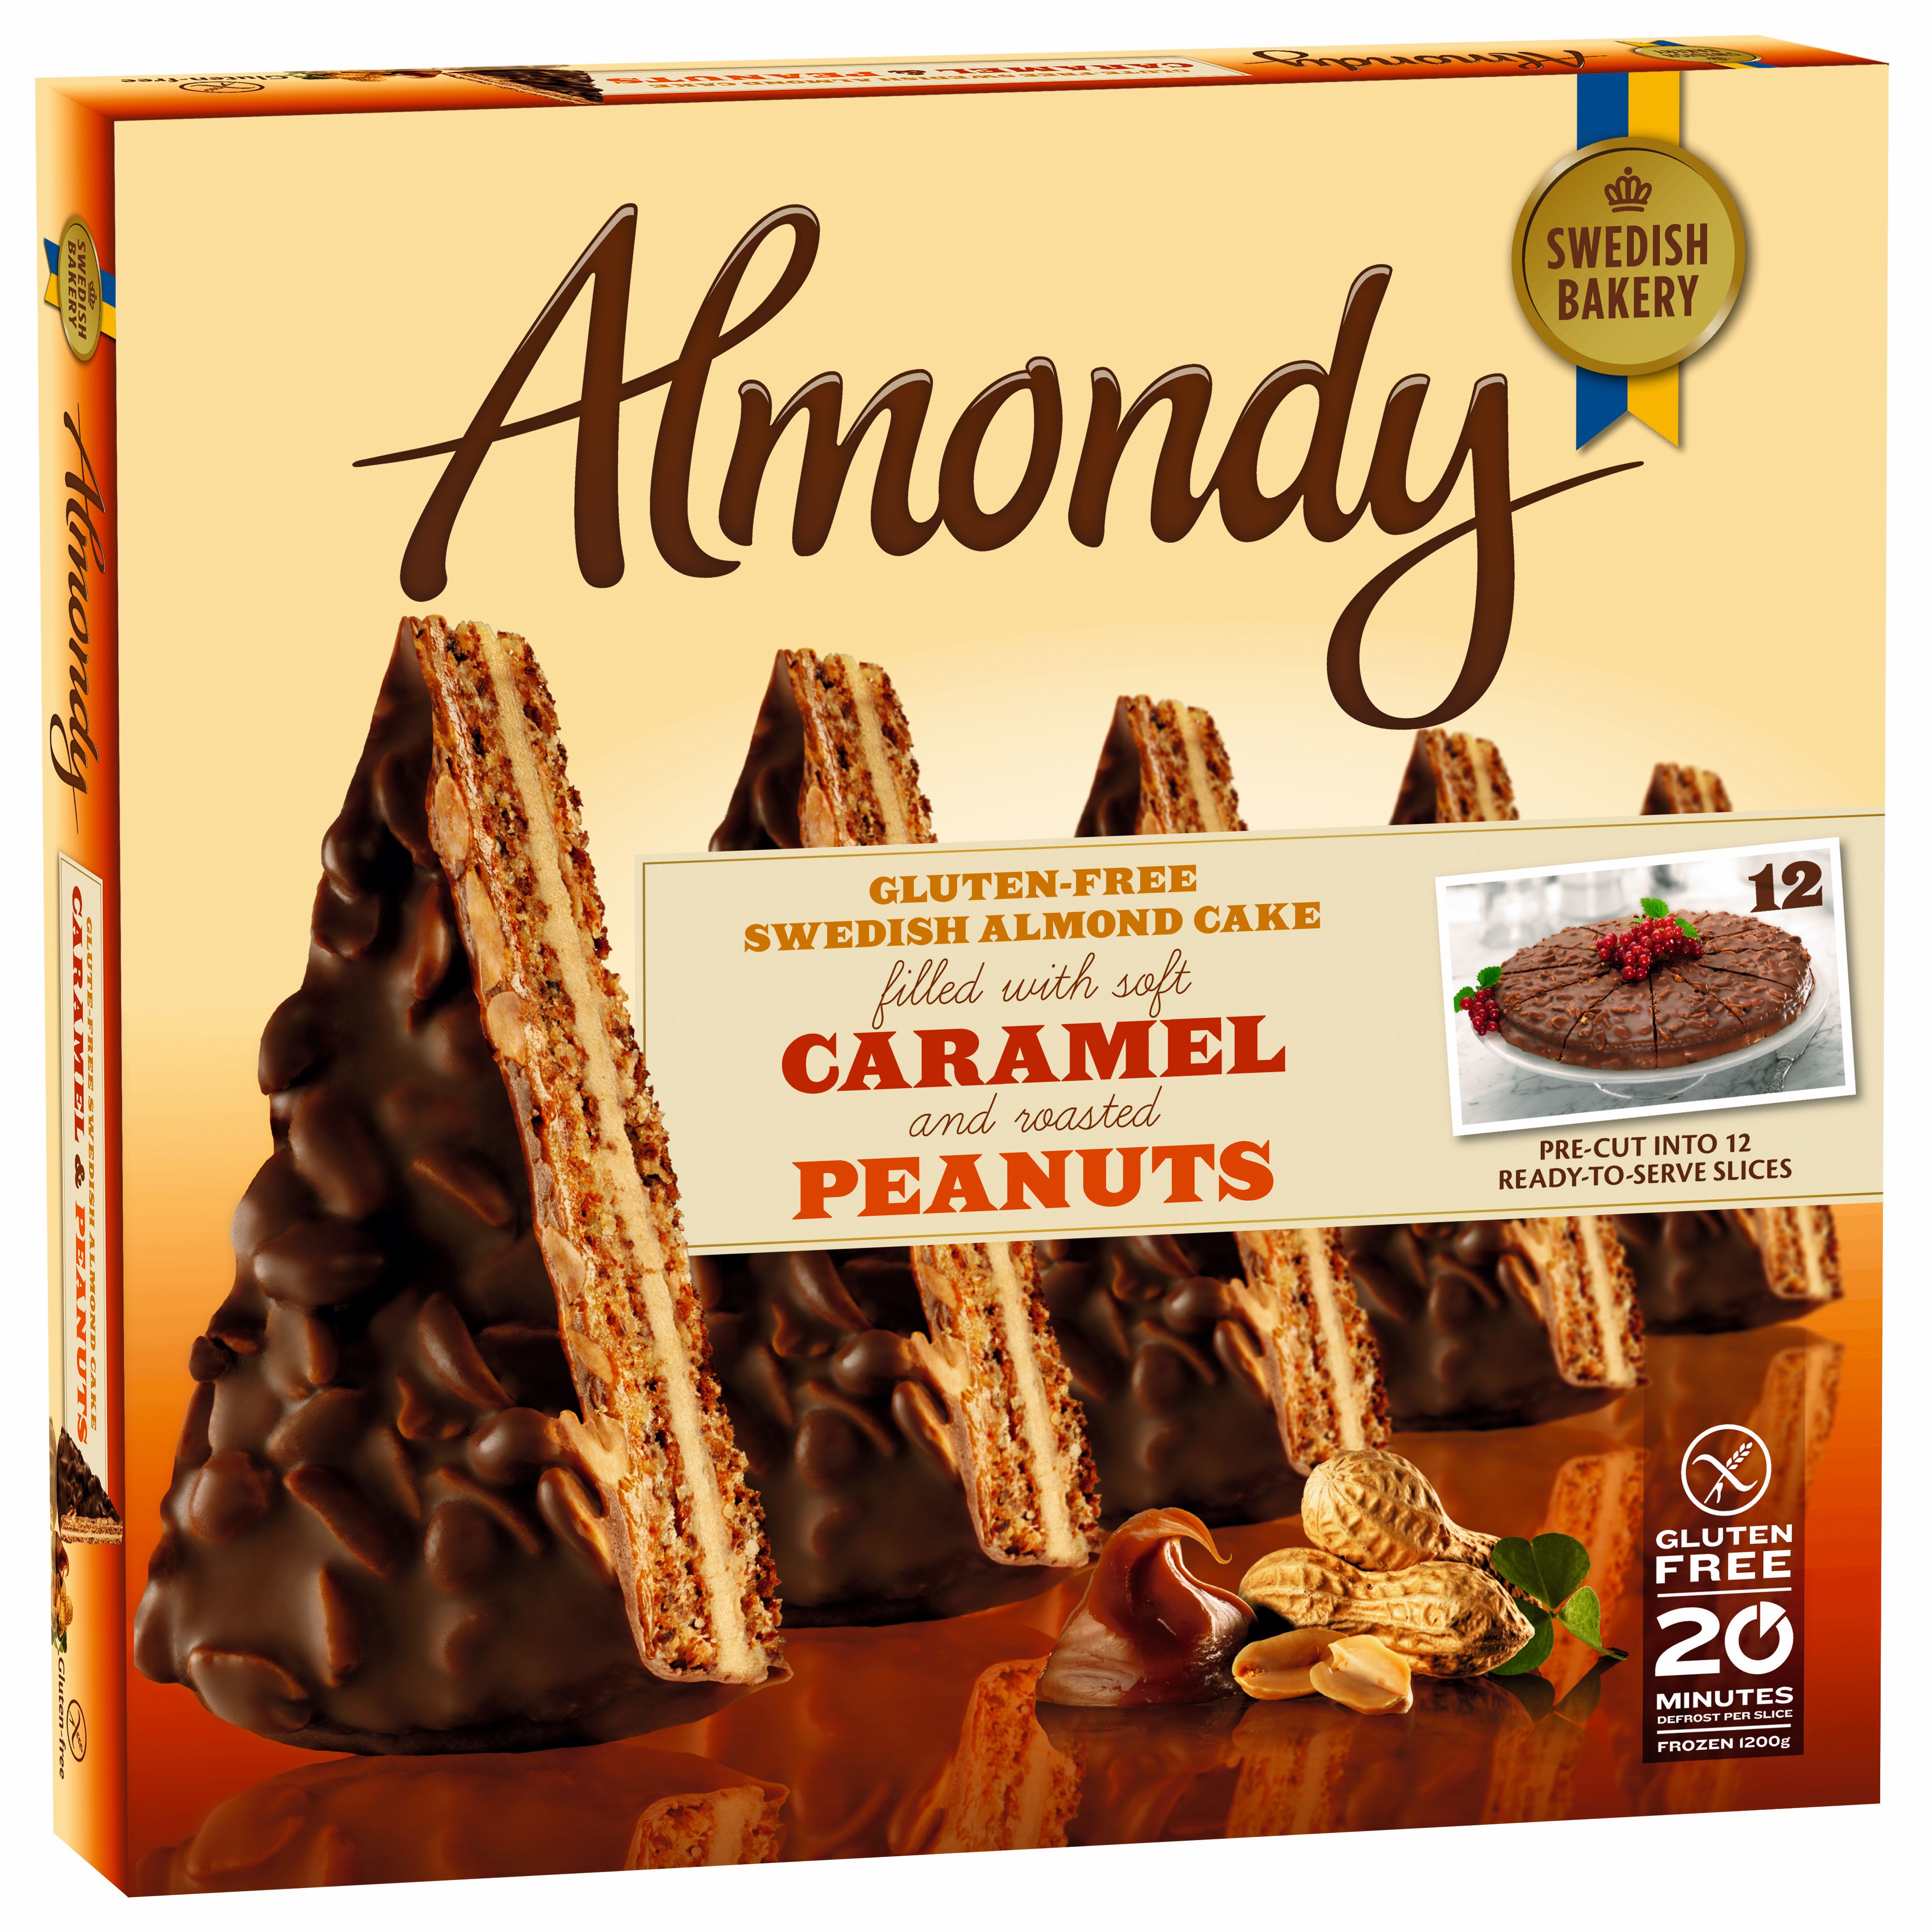         Almond Cake Whit Caramel & Peanuts